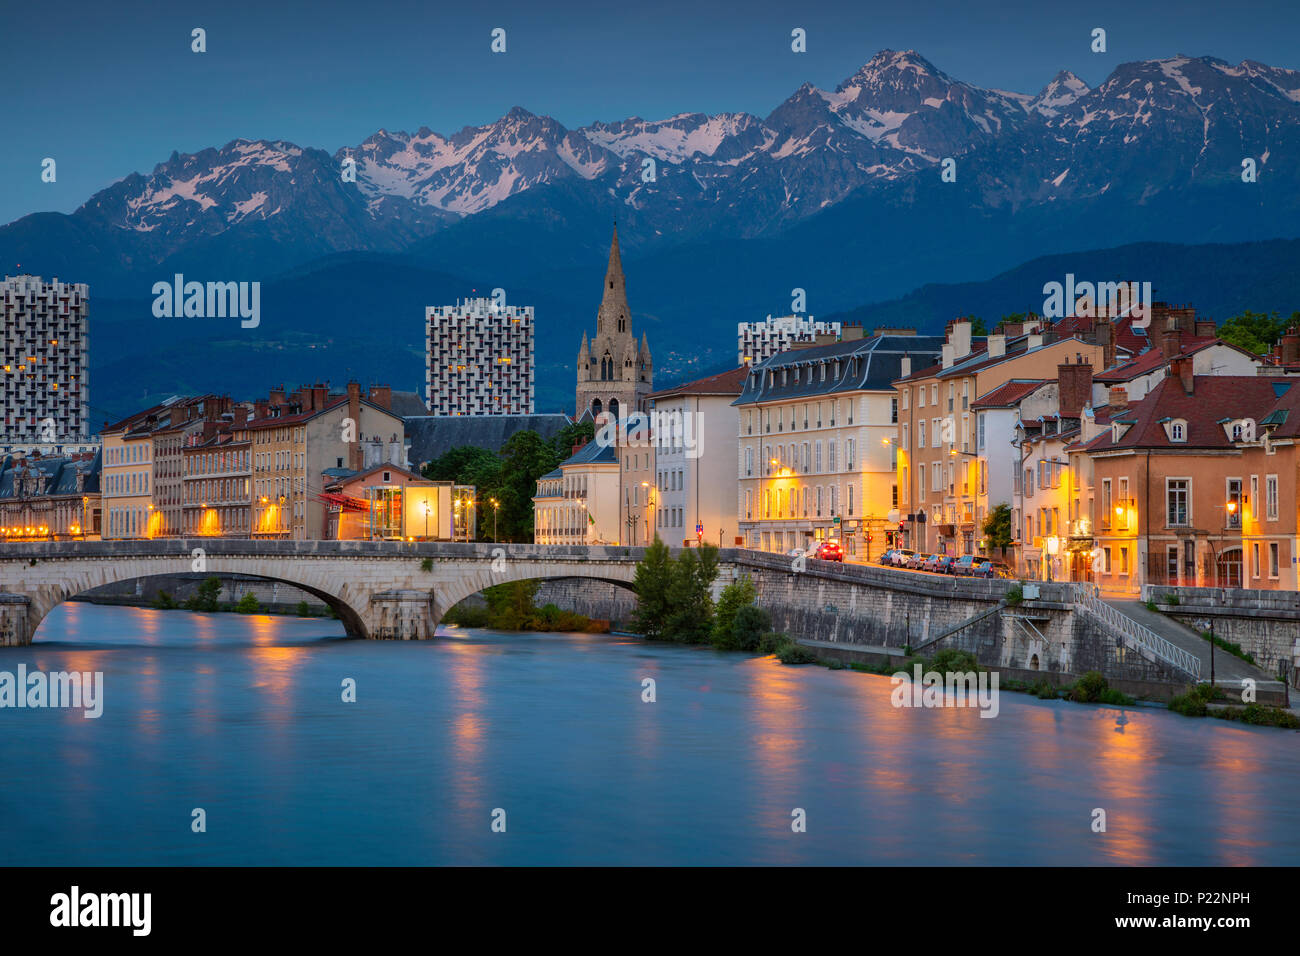 Grenoble Cityscape Image Of Grenoble France During Twilight Blue Hour Stock Photo Alamy